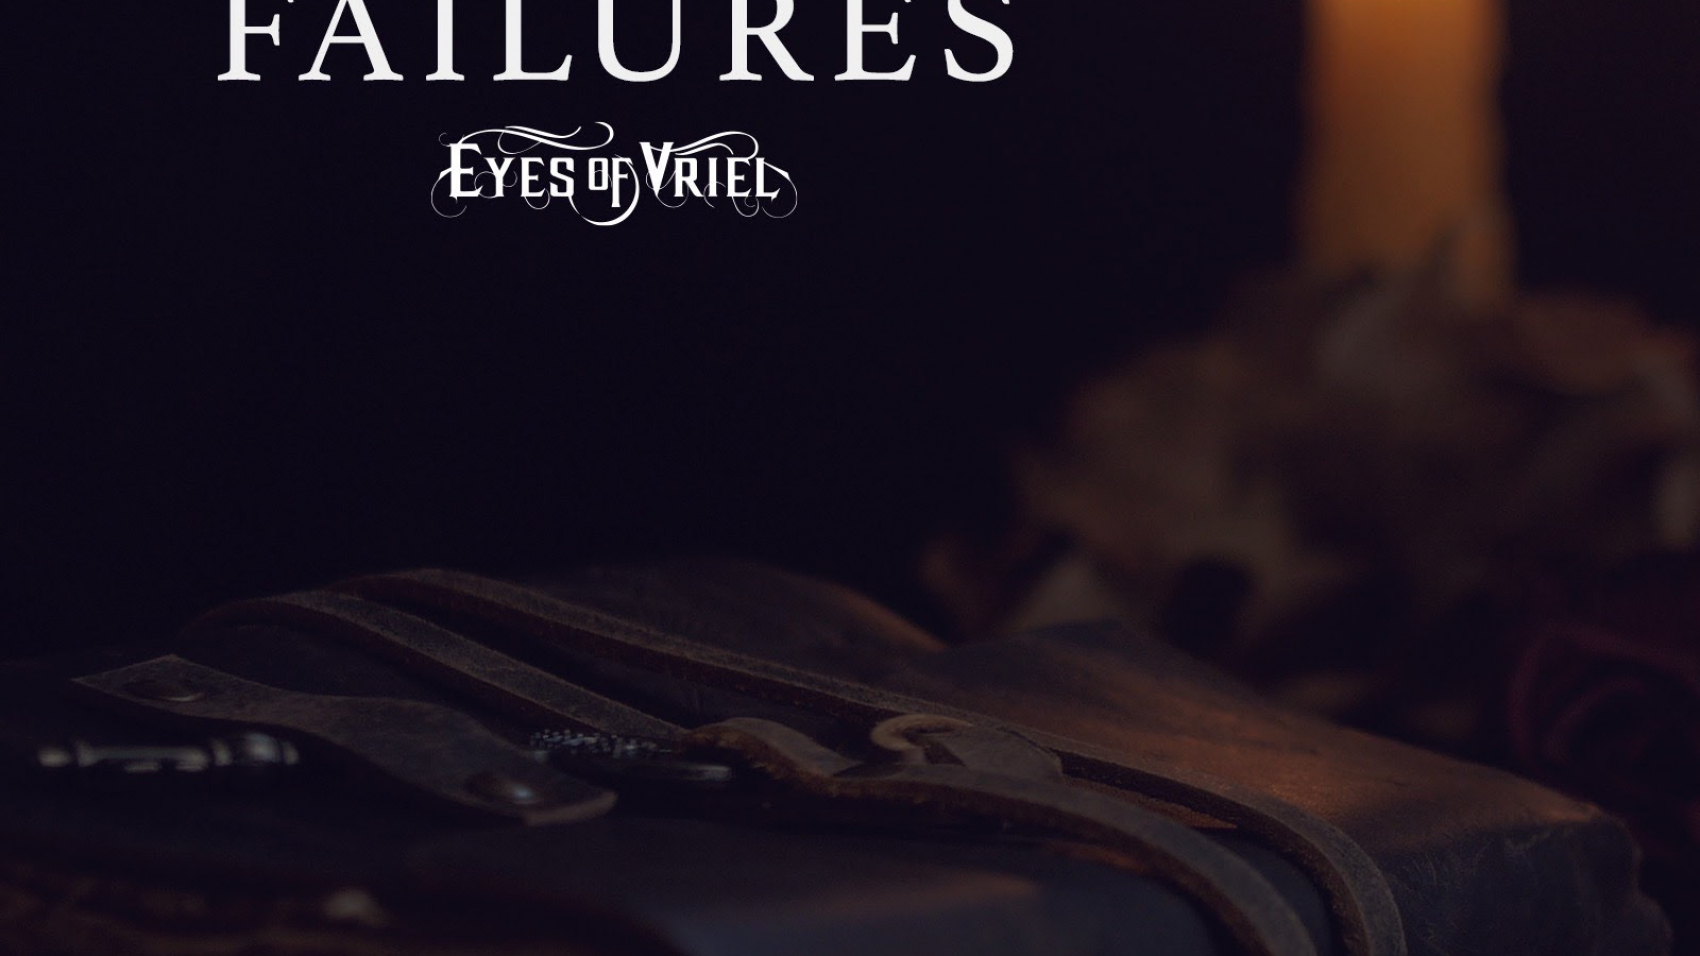 Eyes of Vriel - FAILURES